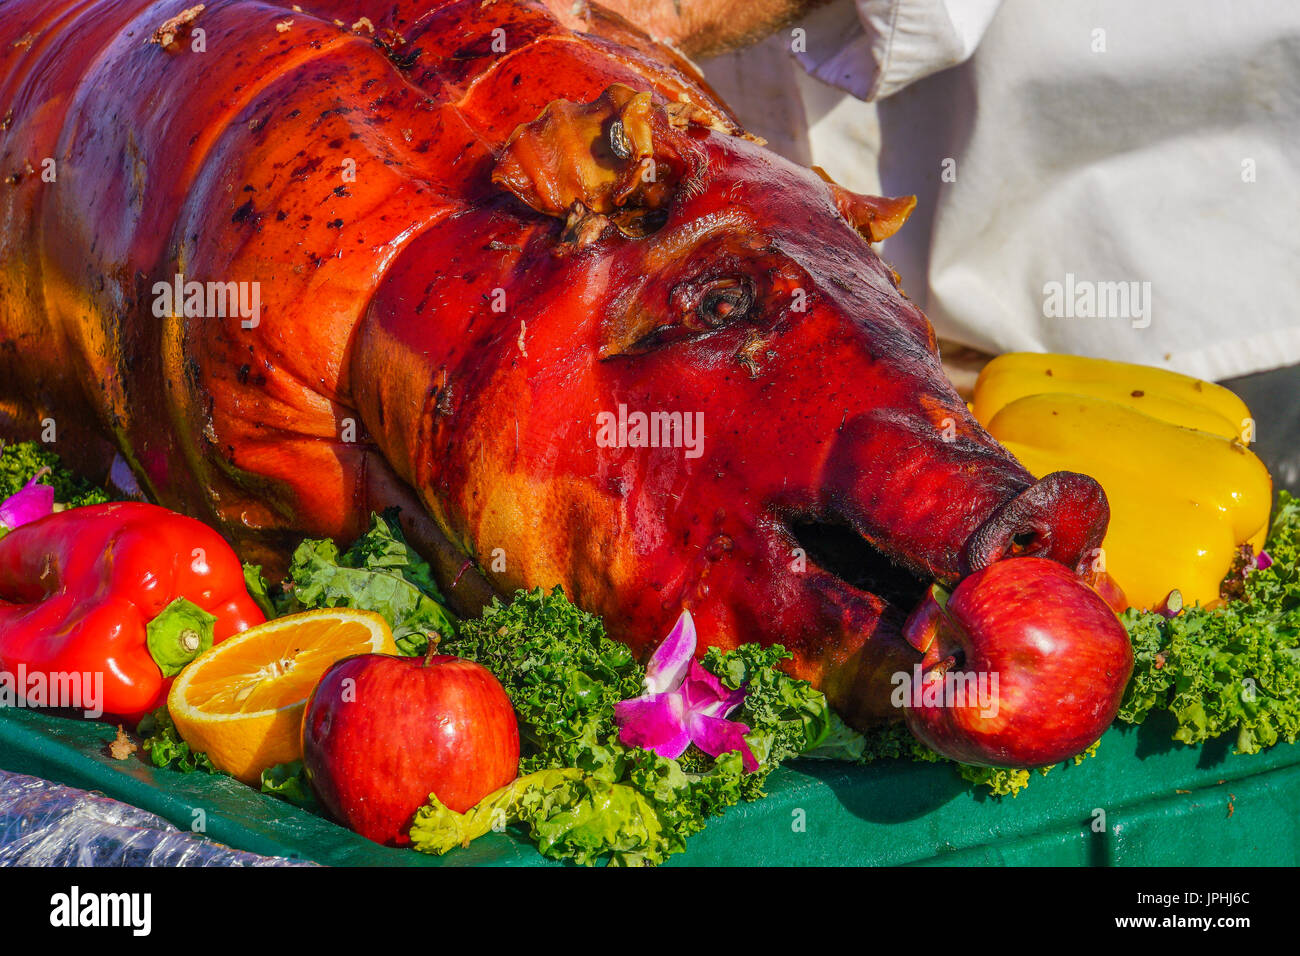 Roasted pig dinner Stock Photo